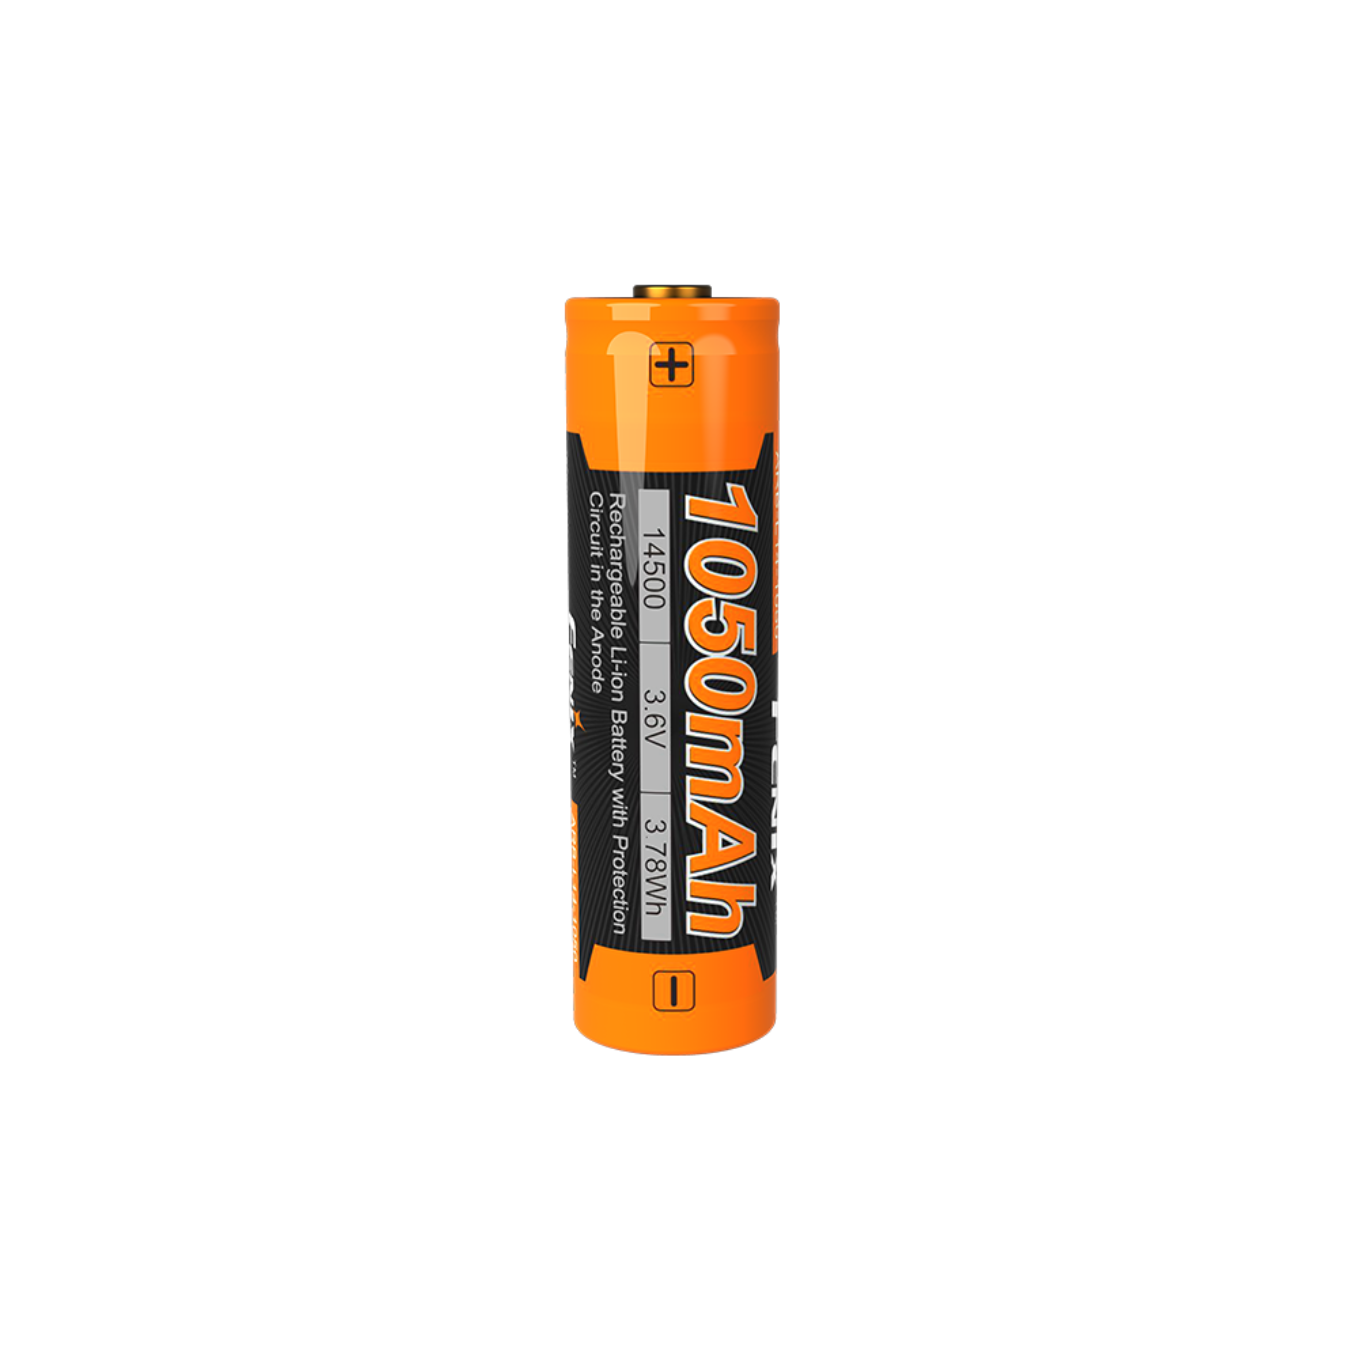 Fenix 14500 3.6V 1050mAh Li-ion Rechargeable Battery (ARB-L14-1050)